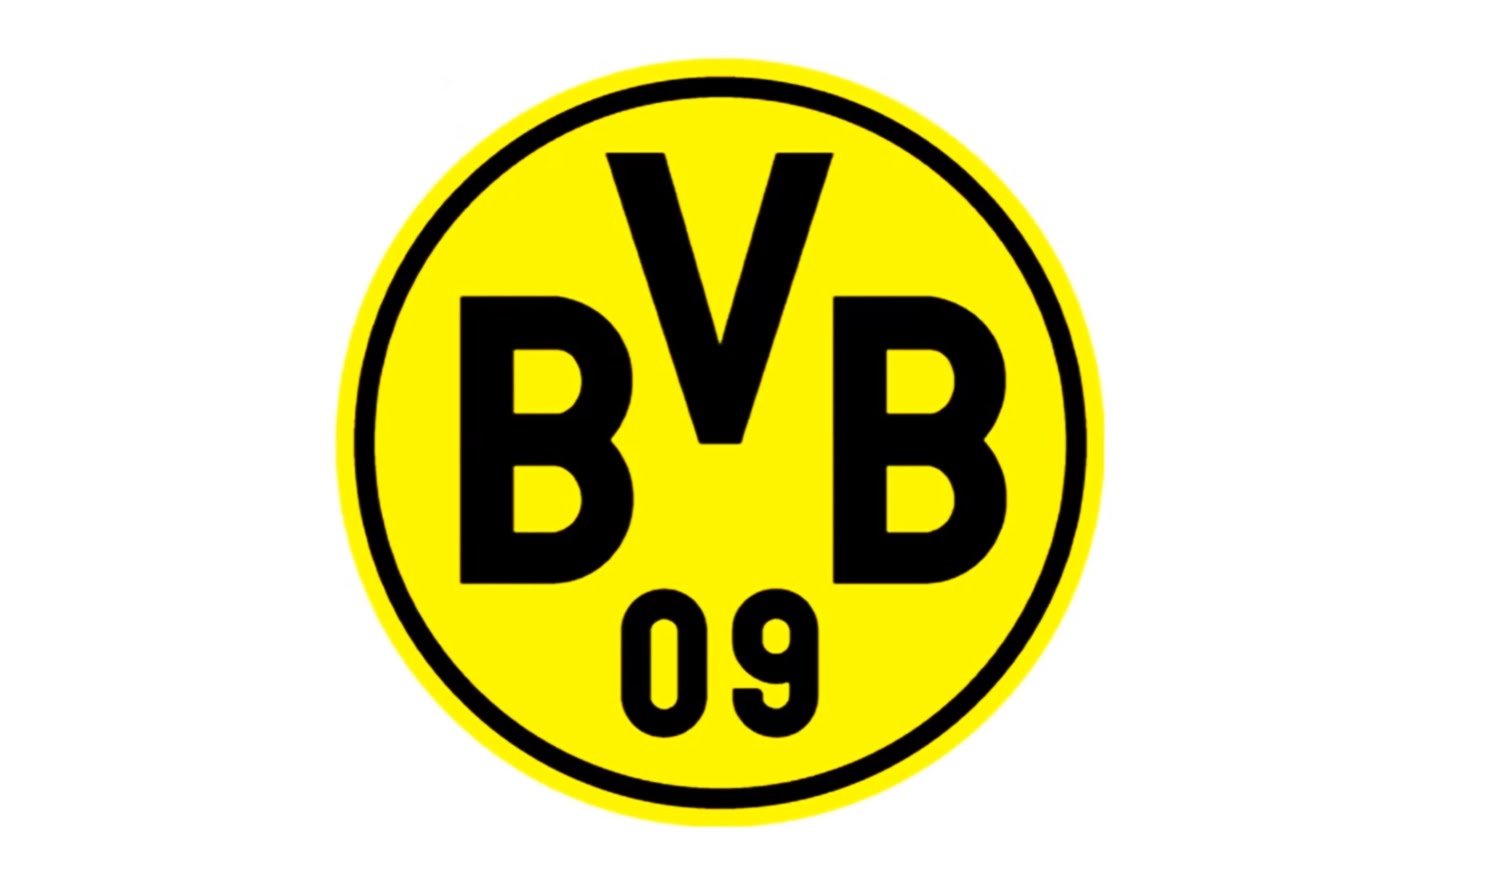 Em jogo maluco, Borussia Dortmund vence Augsburg na Bundesliga - Lance!